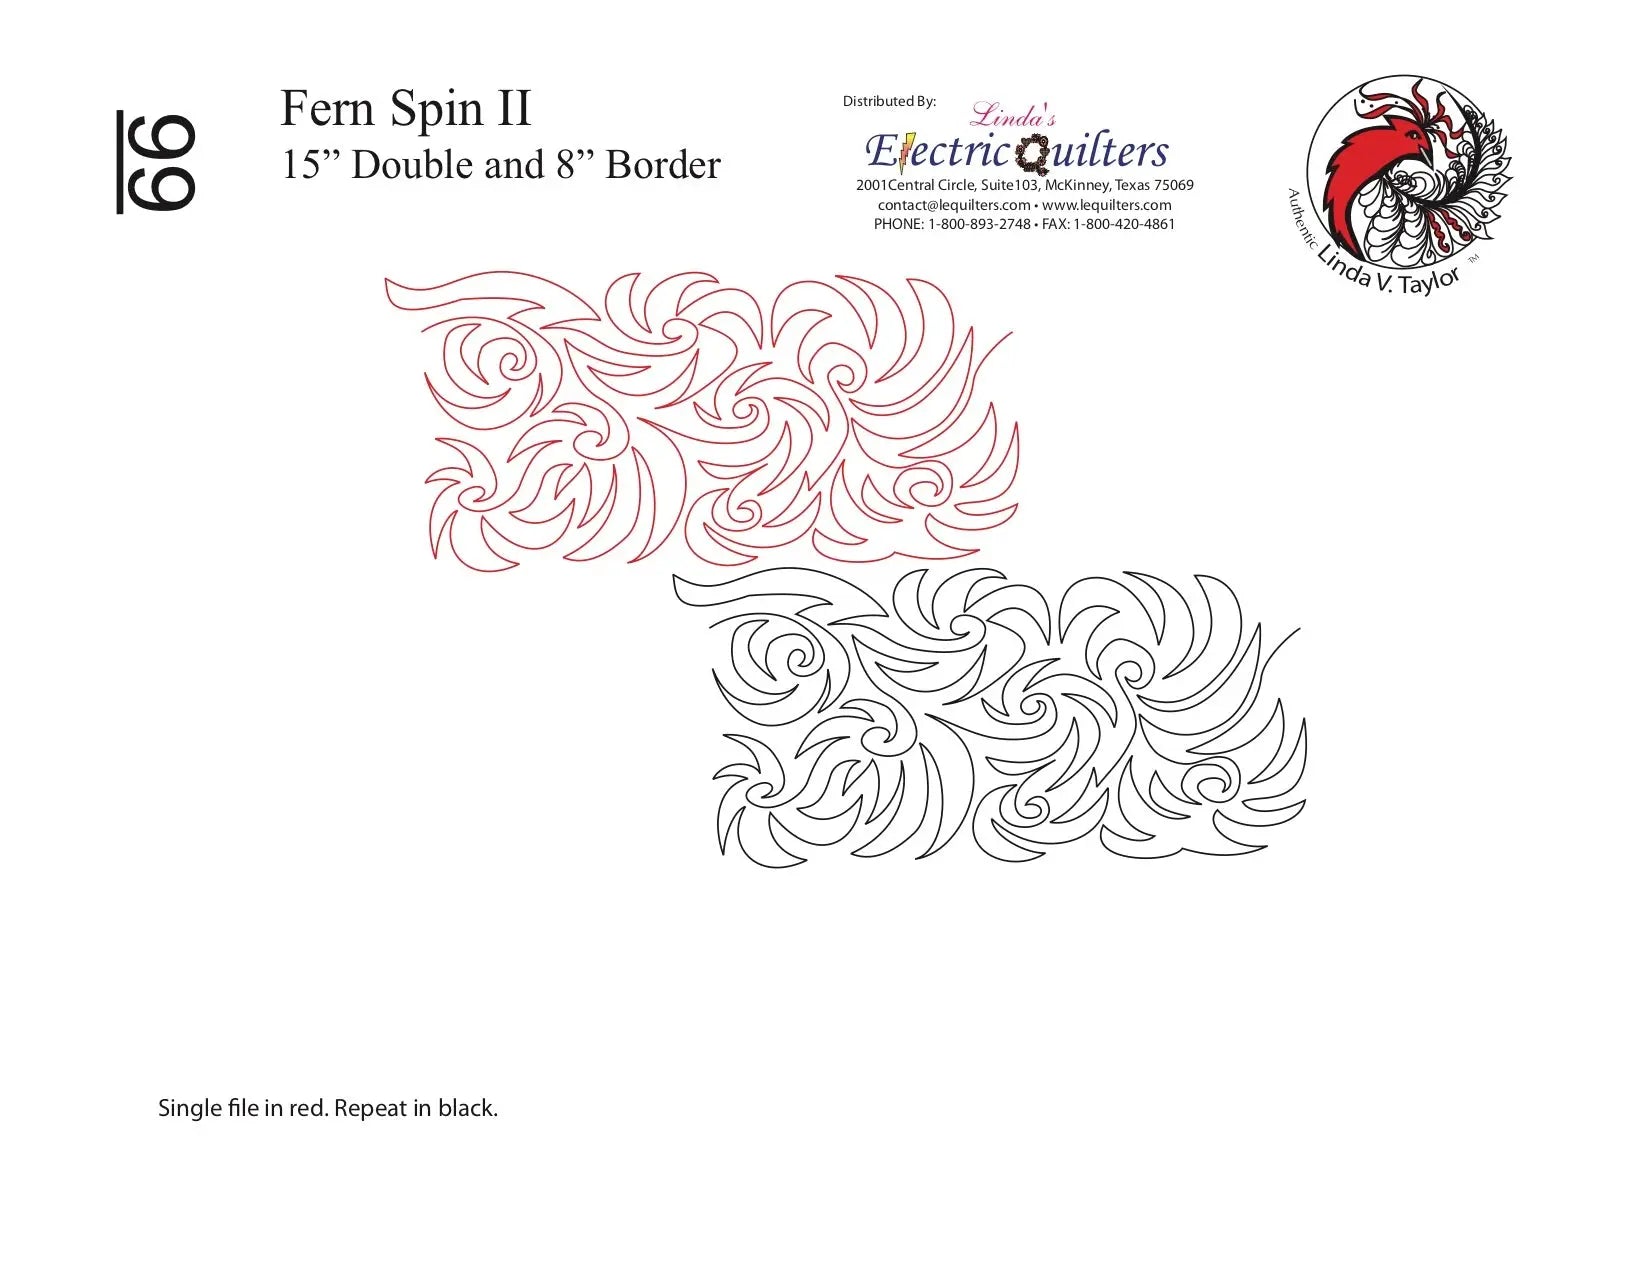 099 Fern Spin Pantograph by Linda V. Taylor